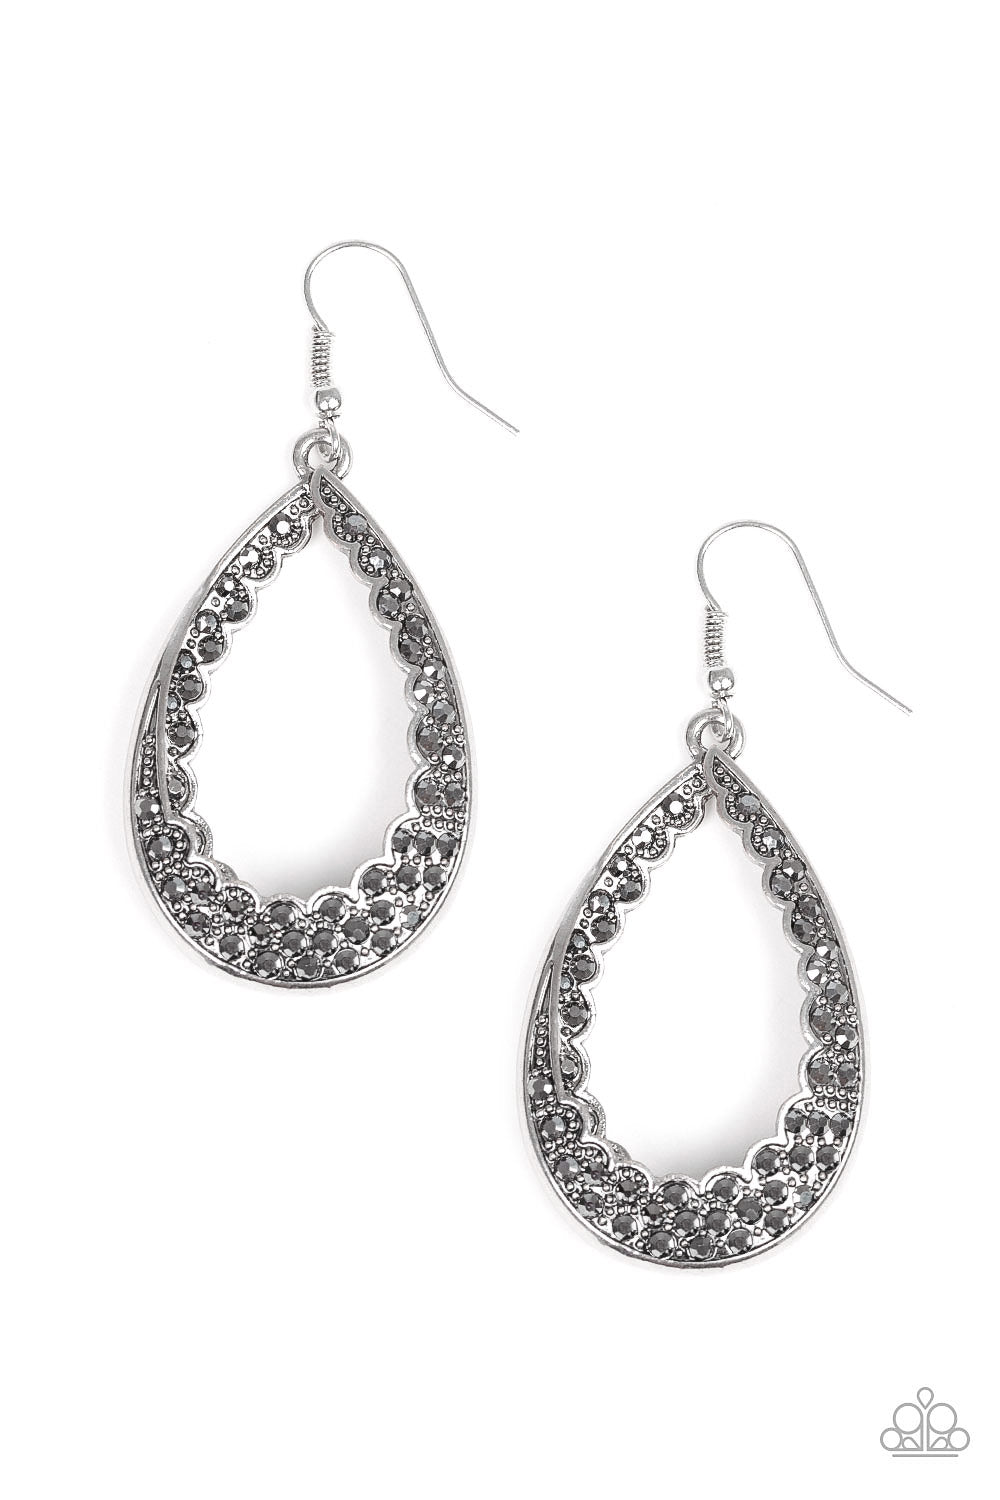 Royal Treatment - silver - Paparazzi earrings